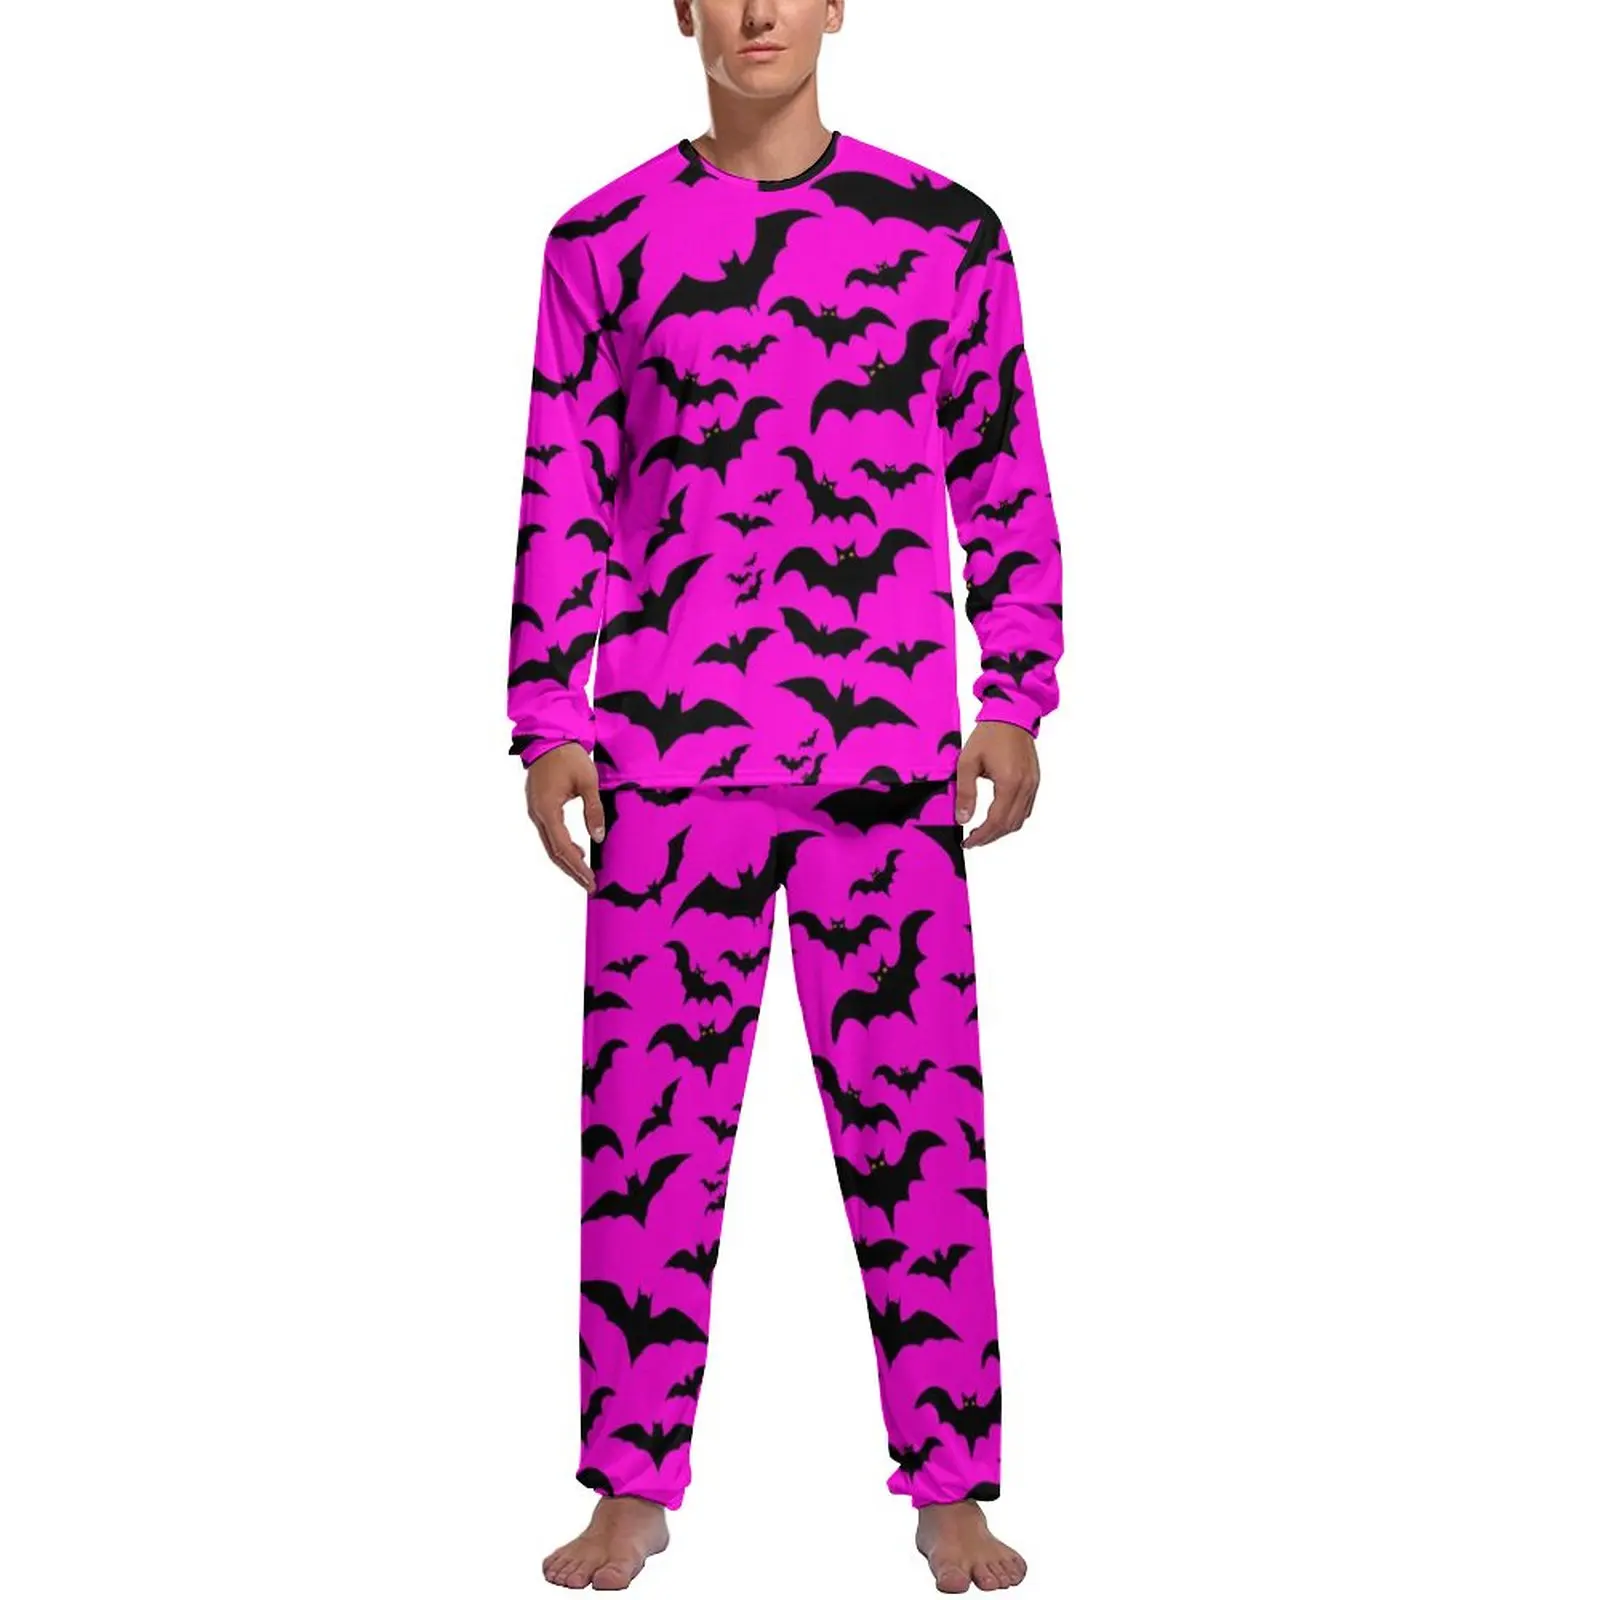 Black Flying Bats Pajamas Autumn 2 Pieces Gothic Halloween Elegant Pajama Sets Man Long-Sleeve Bedroom Graphic Sleepwear